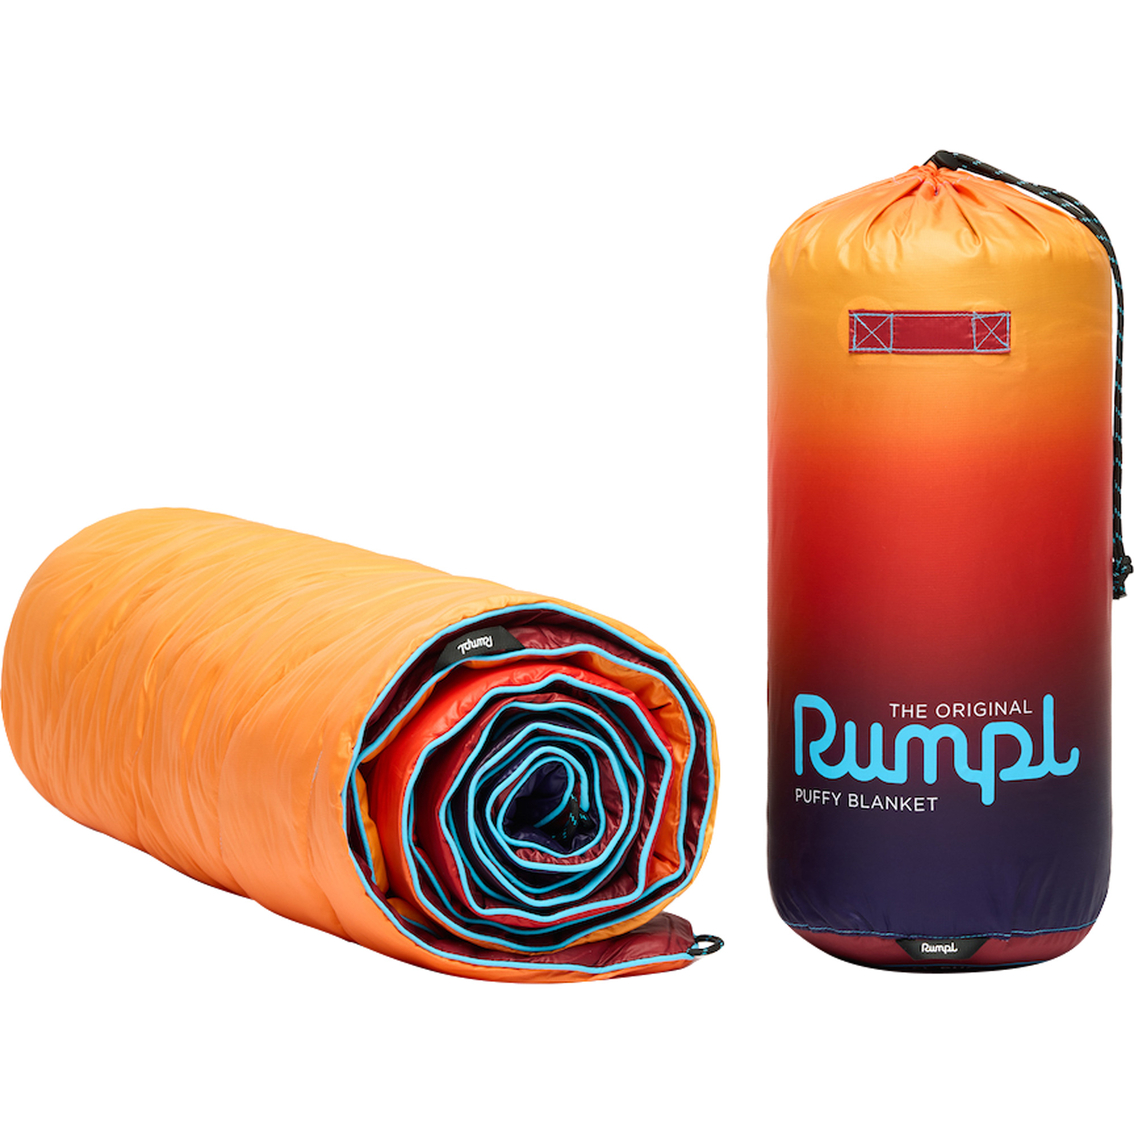 Rumpl The Original Puffy Blanket - Image 3 of 5